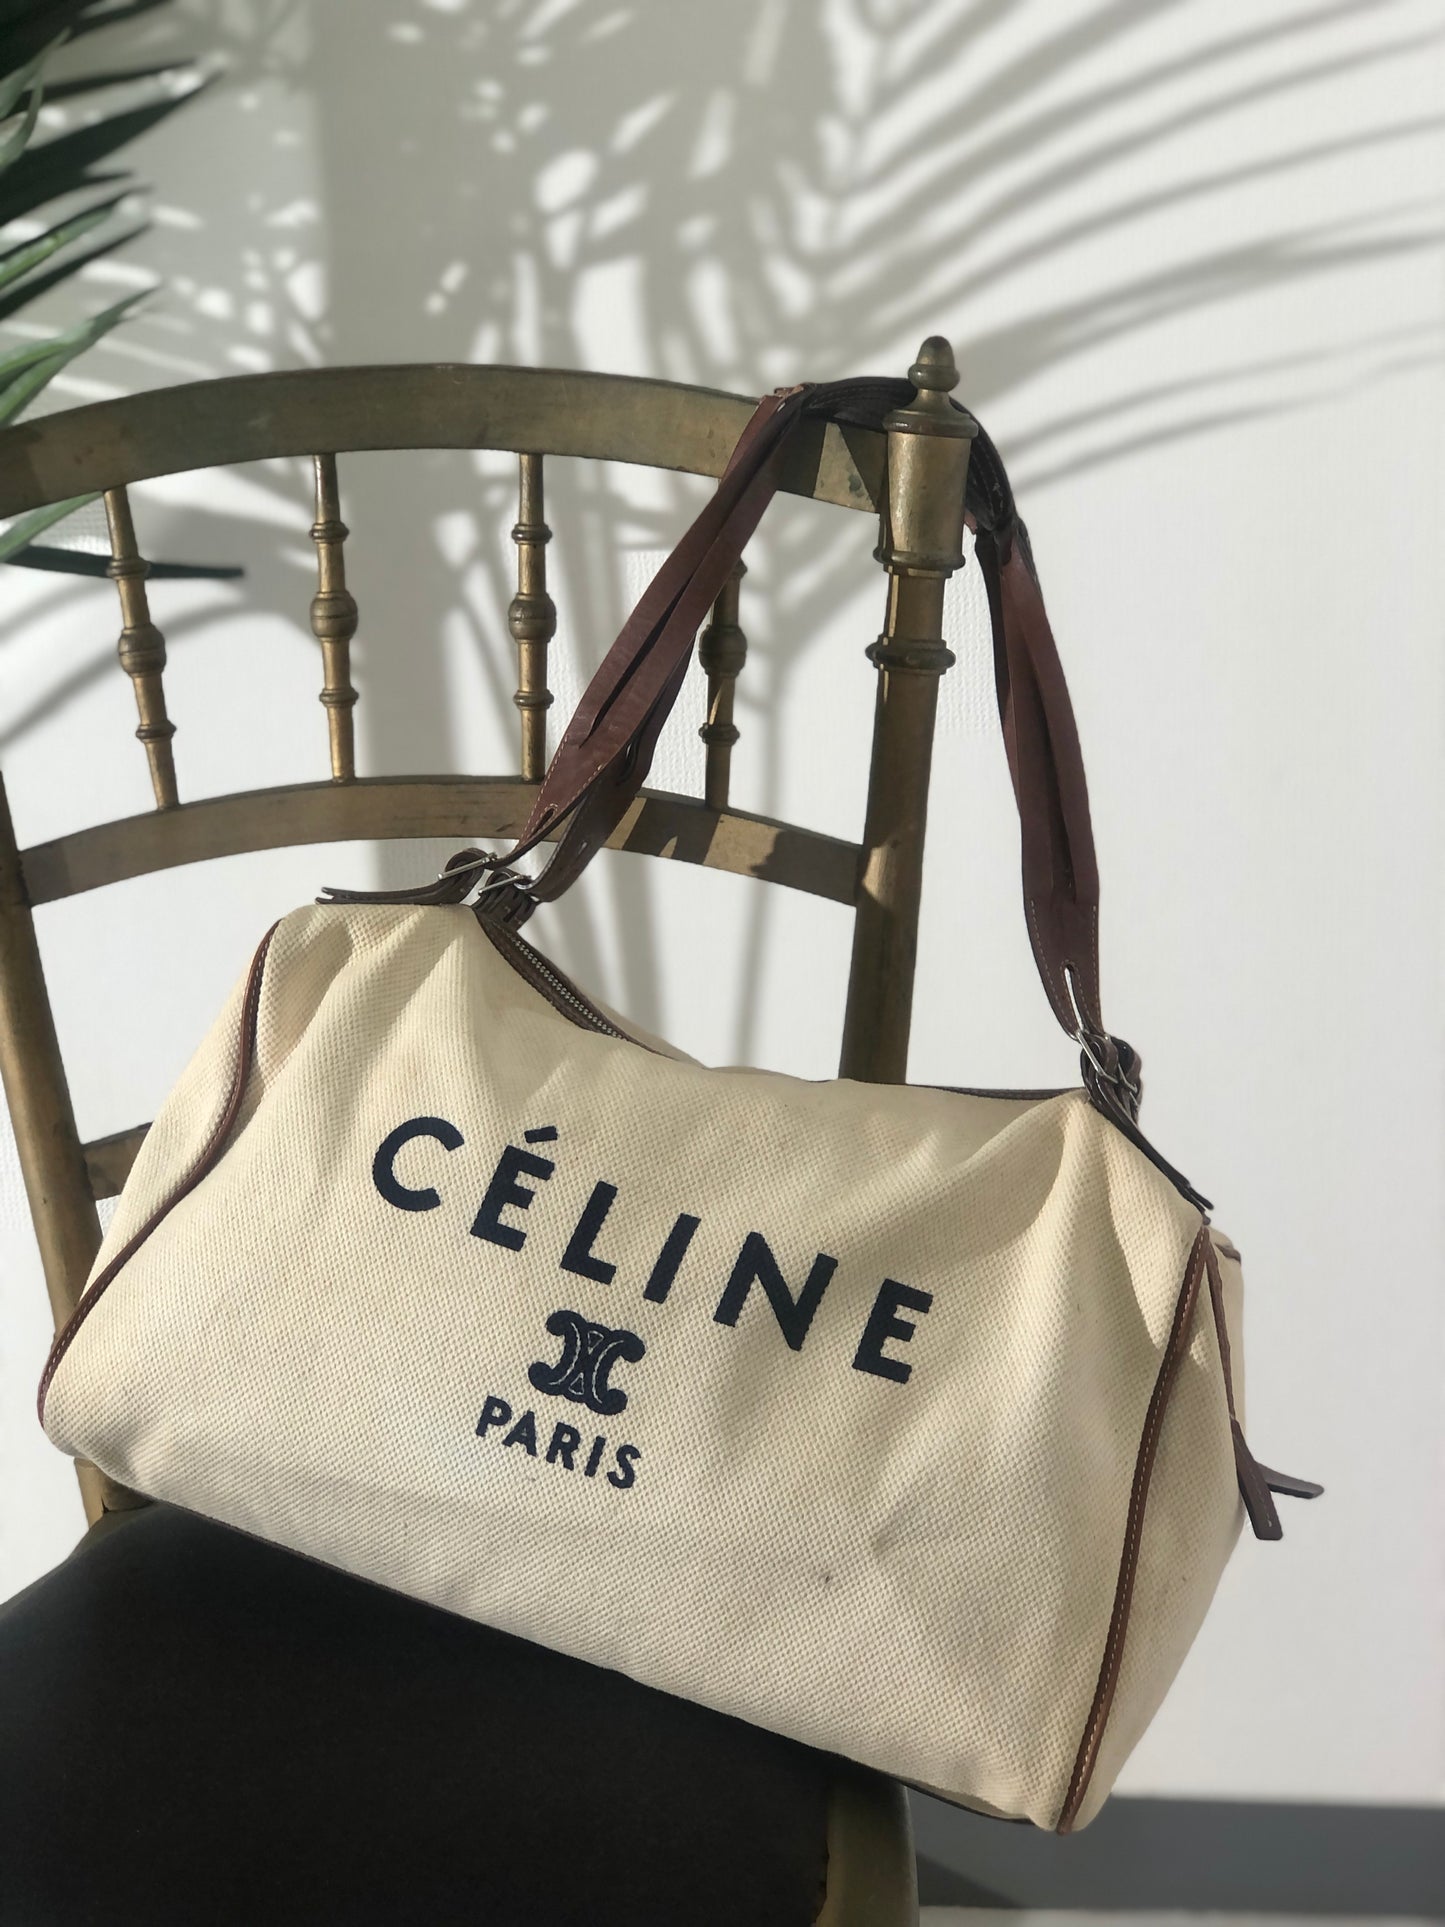 Celine Paris Logo 